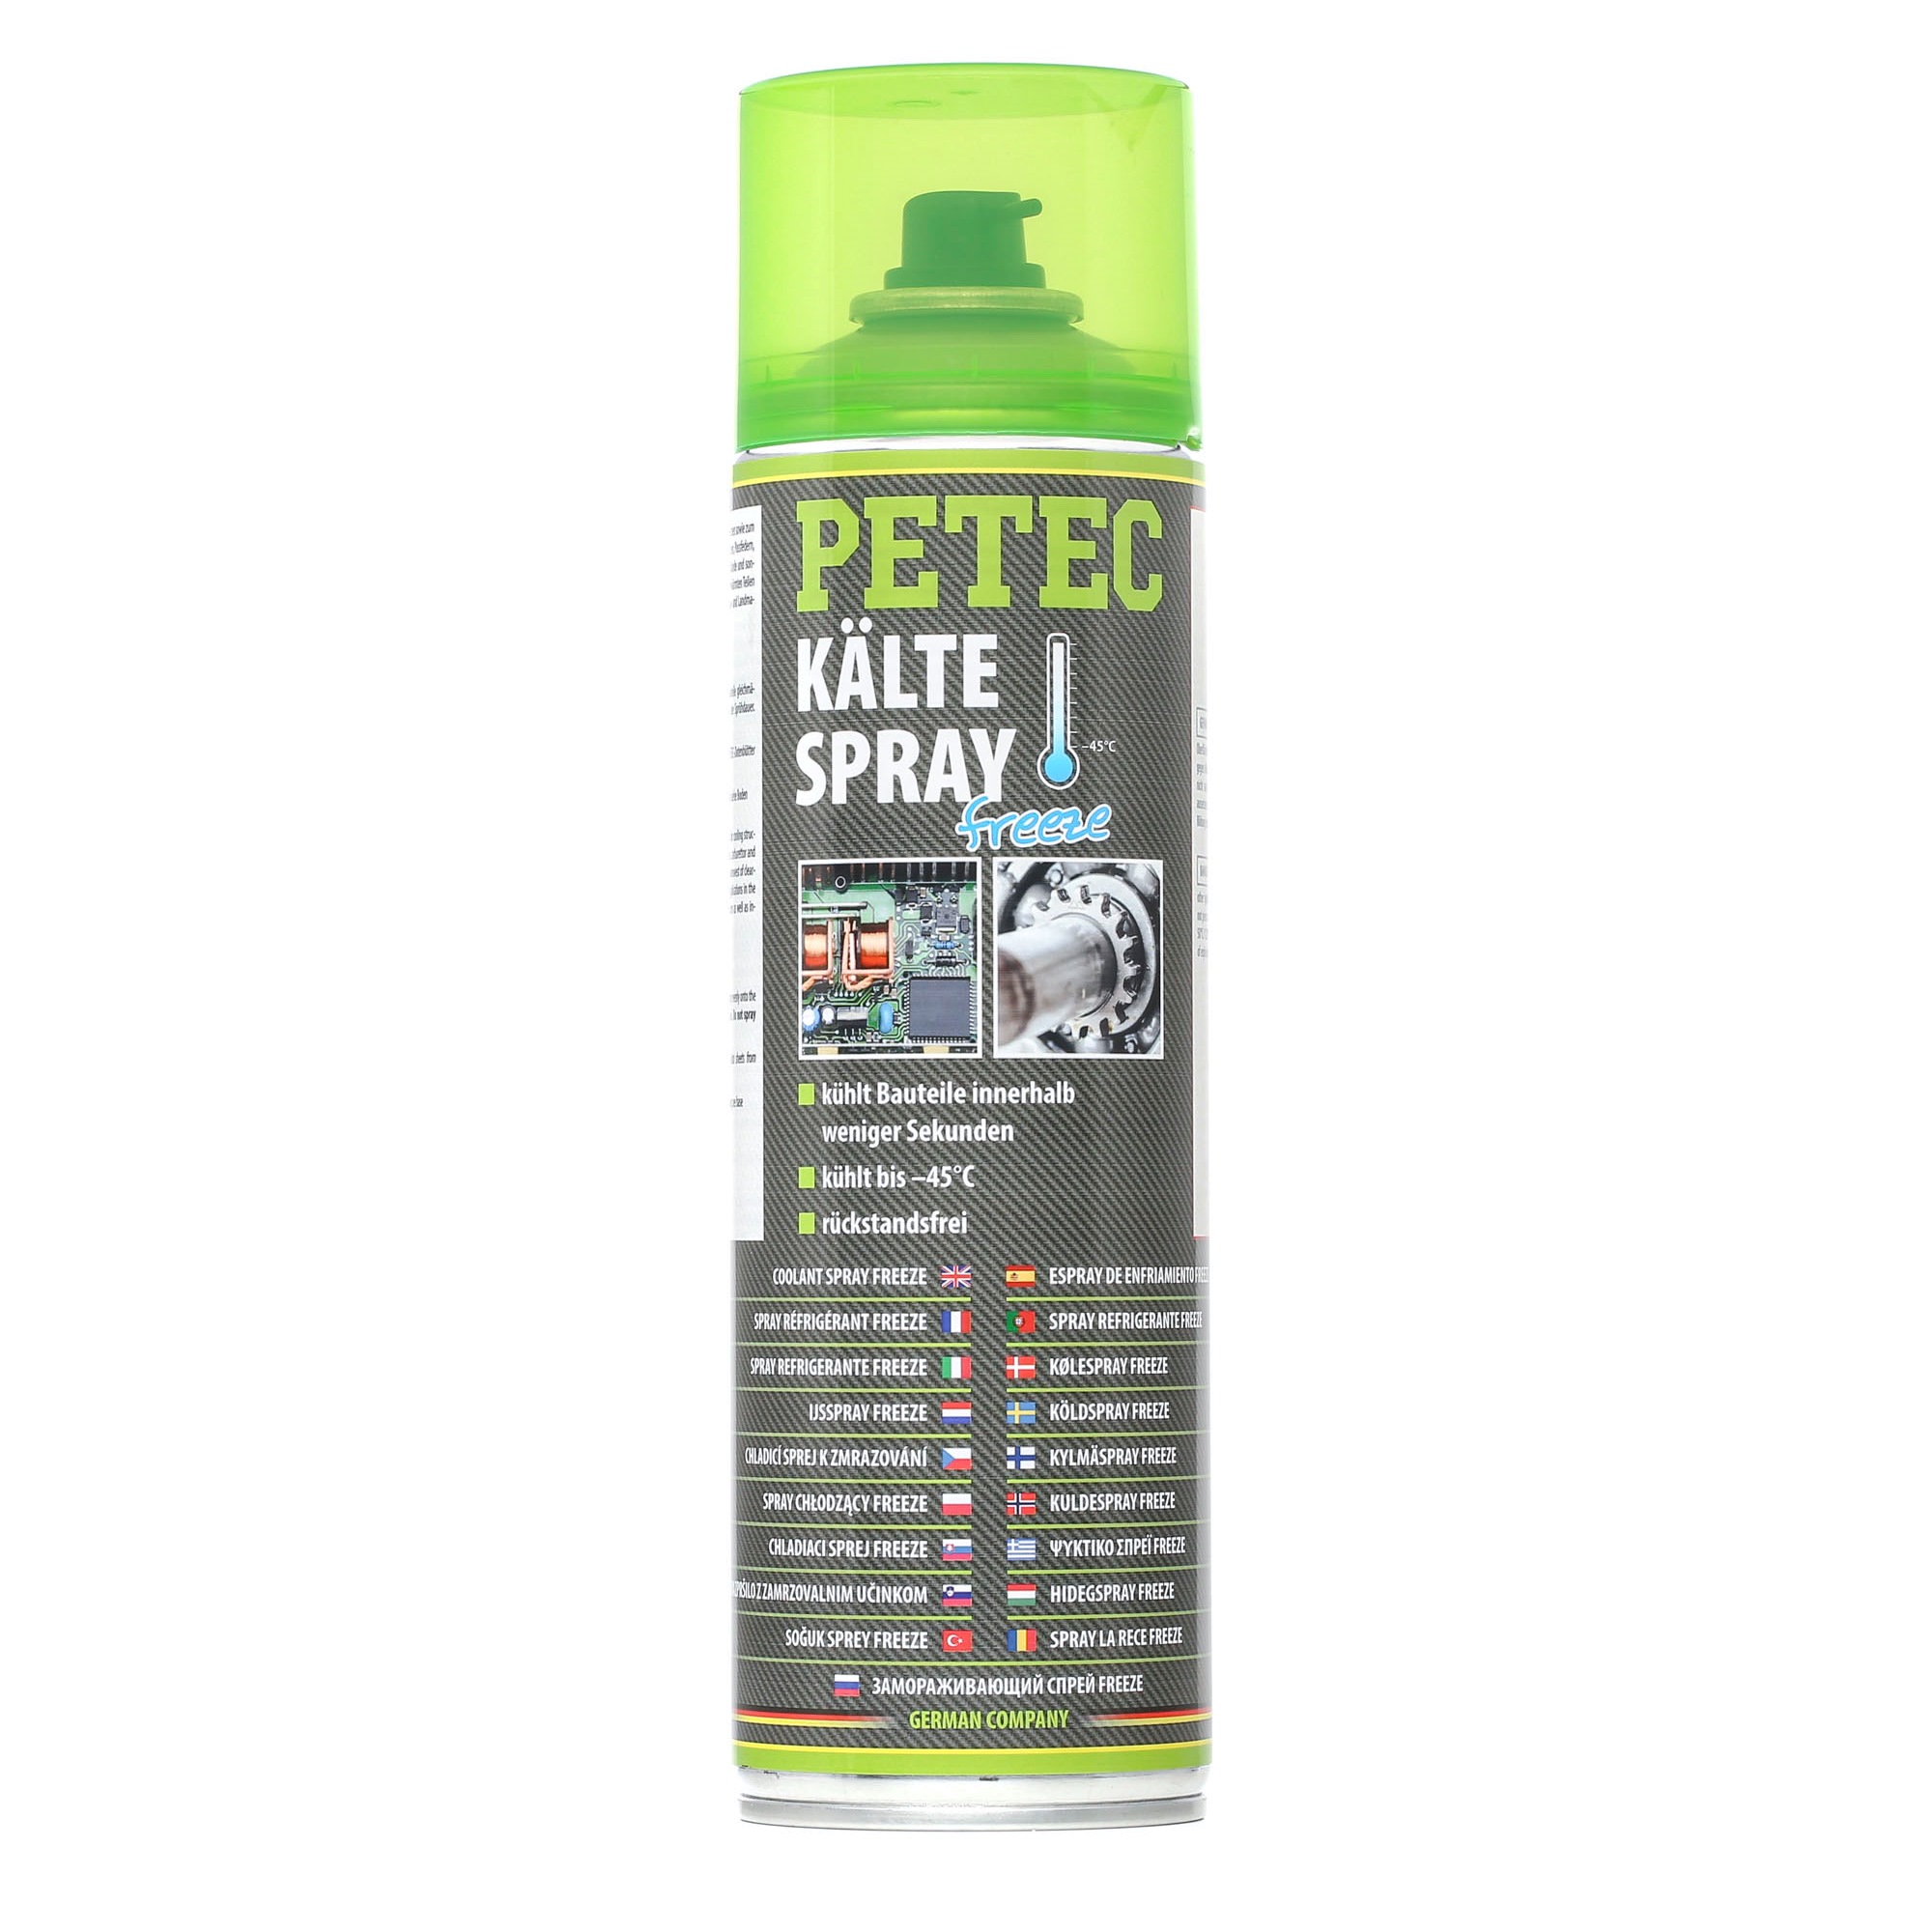 PETEC 71950 Technical sprays